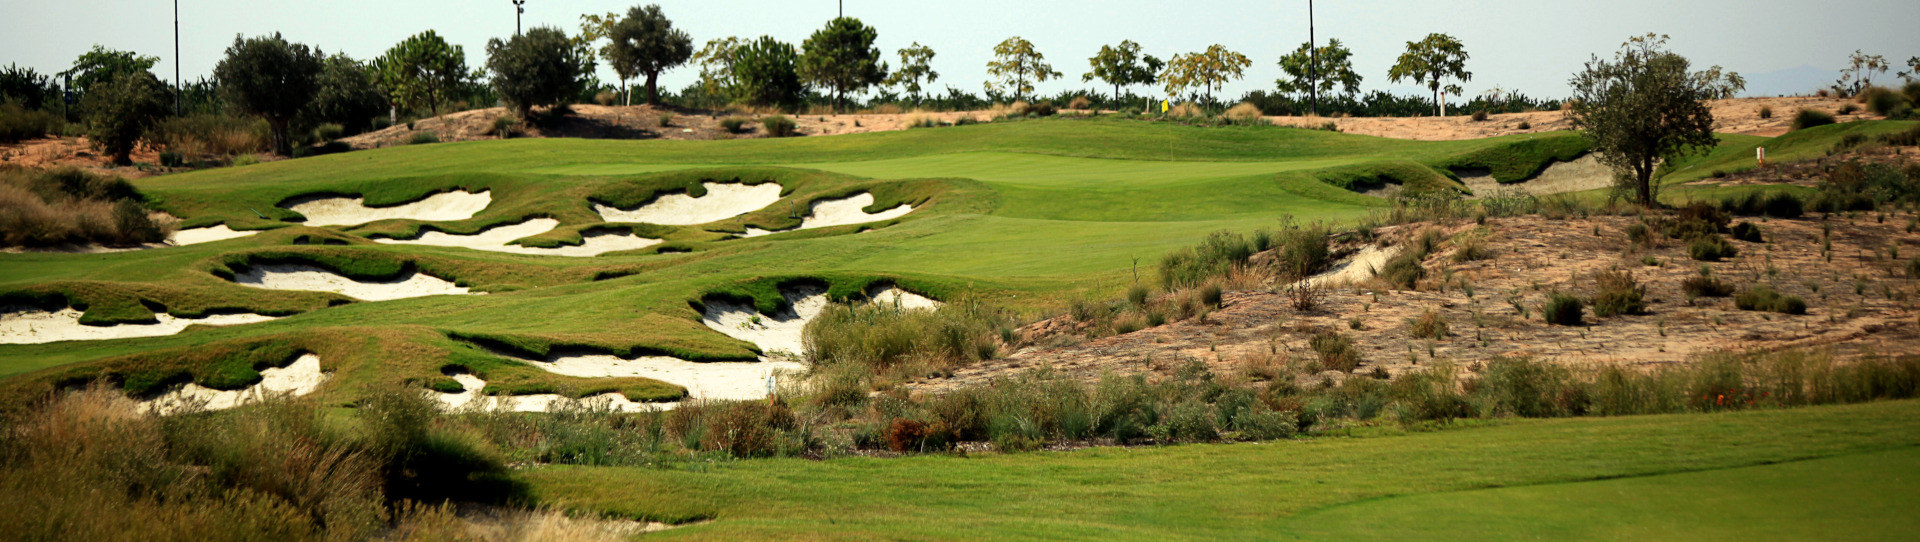 Spain golf courses - Hacienda Riquelme Golf Resort - Photo 1